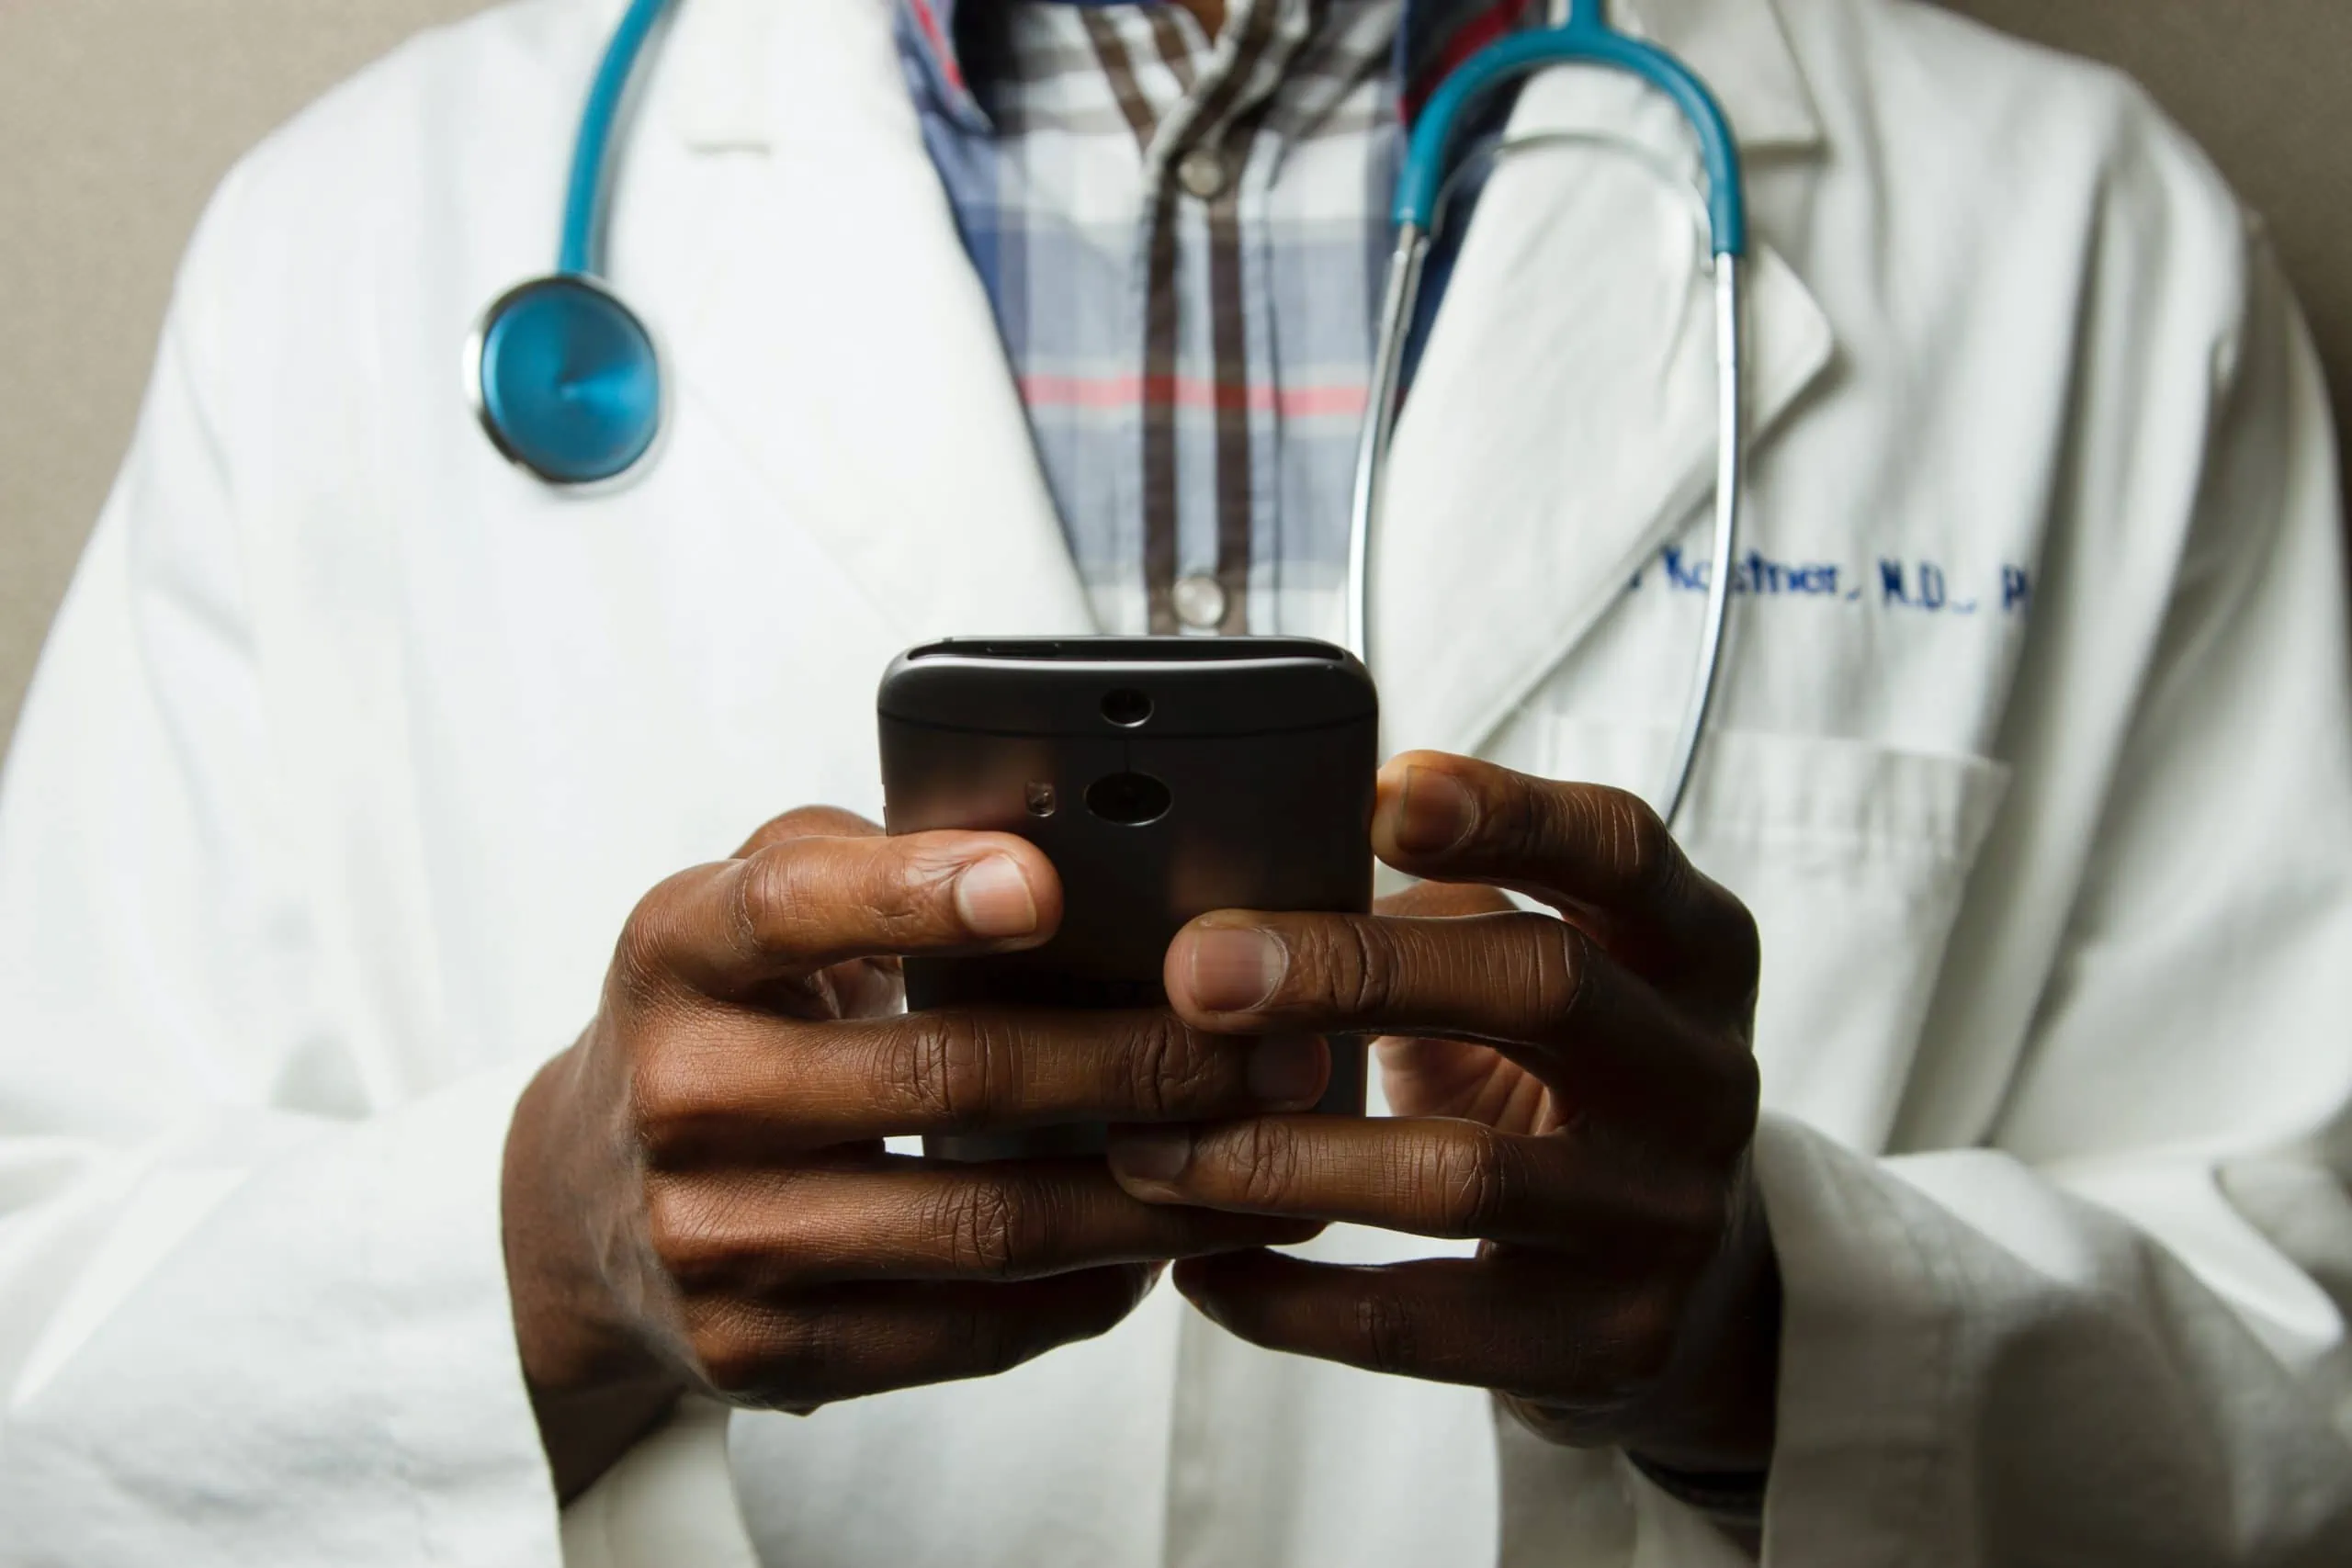 Doctor monitoring hospital insights using video analytics platform on phone